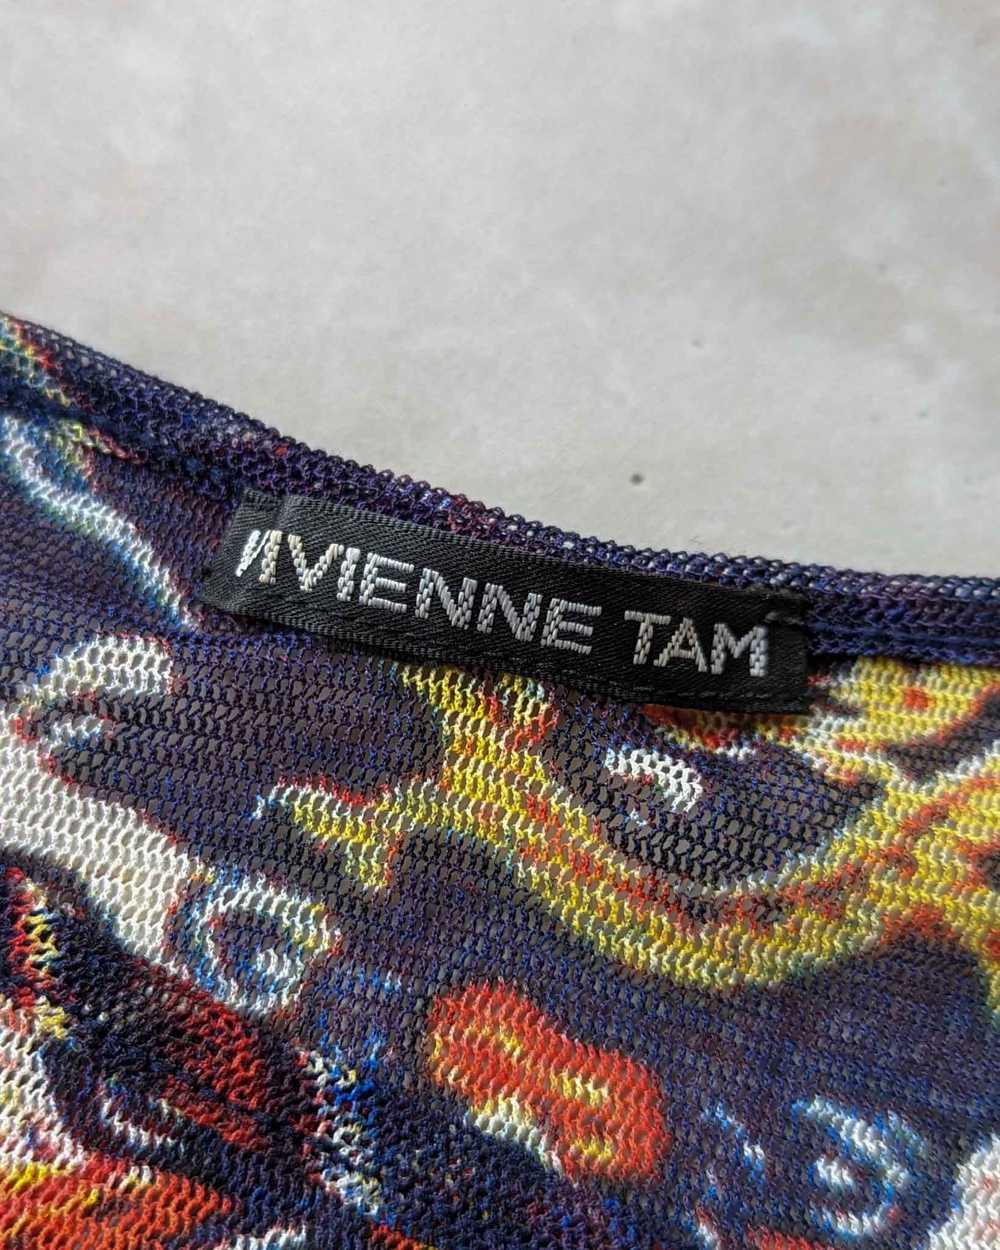 90s Vivienne Tam "Dragon Robes" Mesh Top - image 7